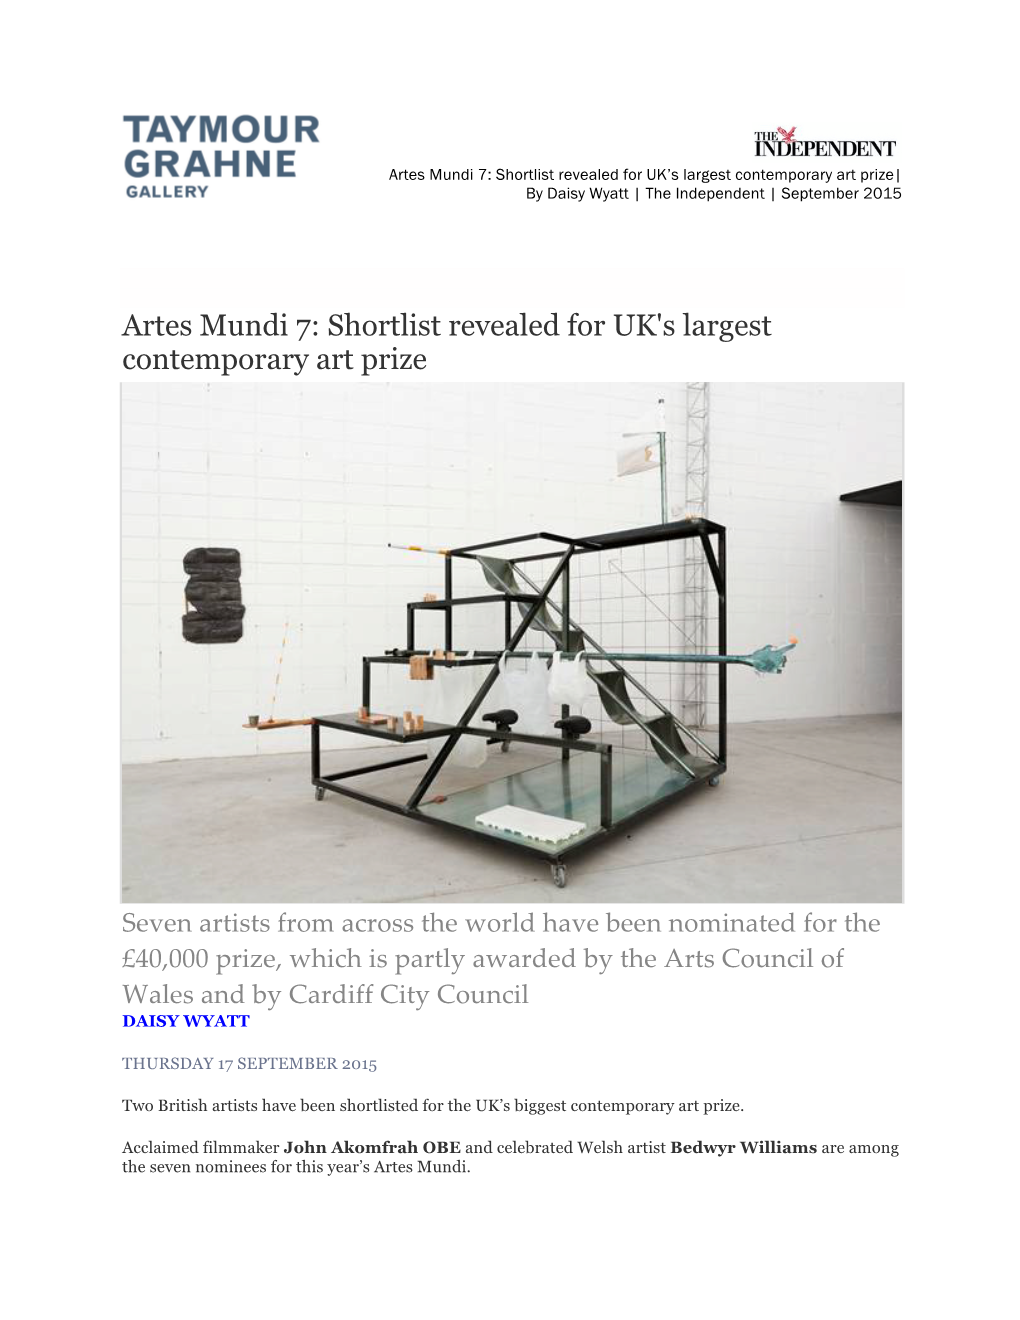 Artes Mundi 7: Shortlist Revealed for UK's Largest Contemporary Art Prize